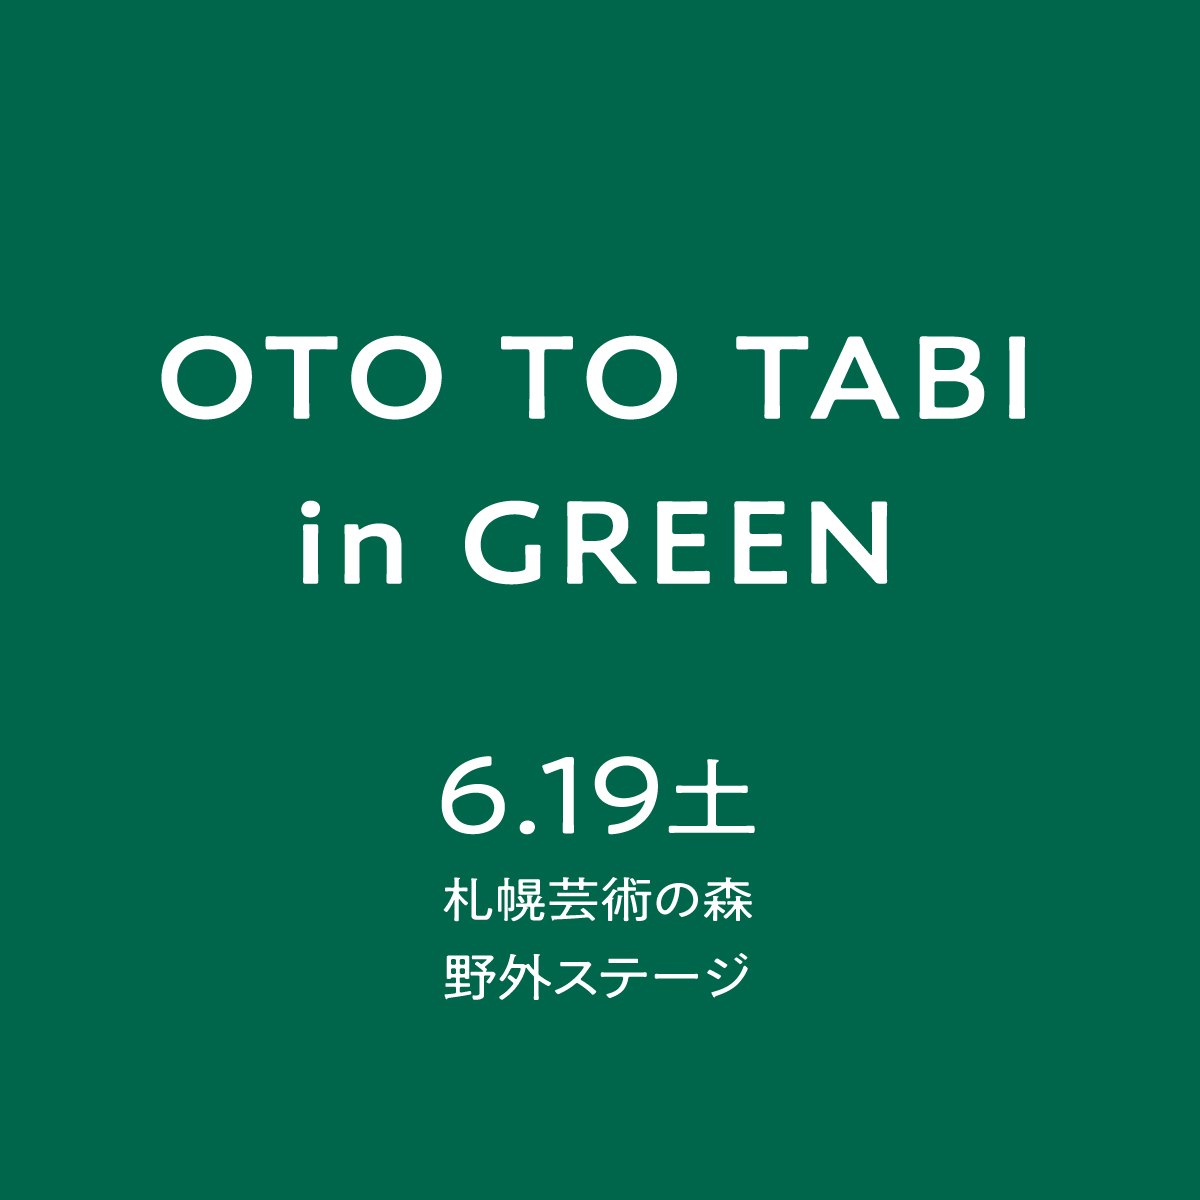 Oto To Tabi おととたび S Tweet 6 19 土 に札幌芸術の森 野外ステージで開催するイベントのタイトルが Oto To Tabi In Green に決まりました Trendsmap